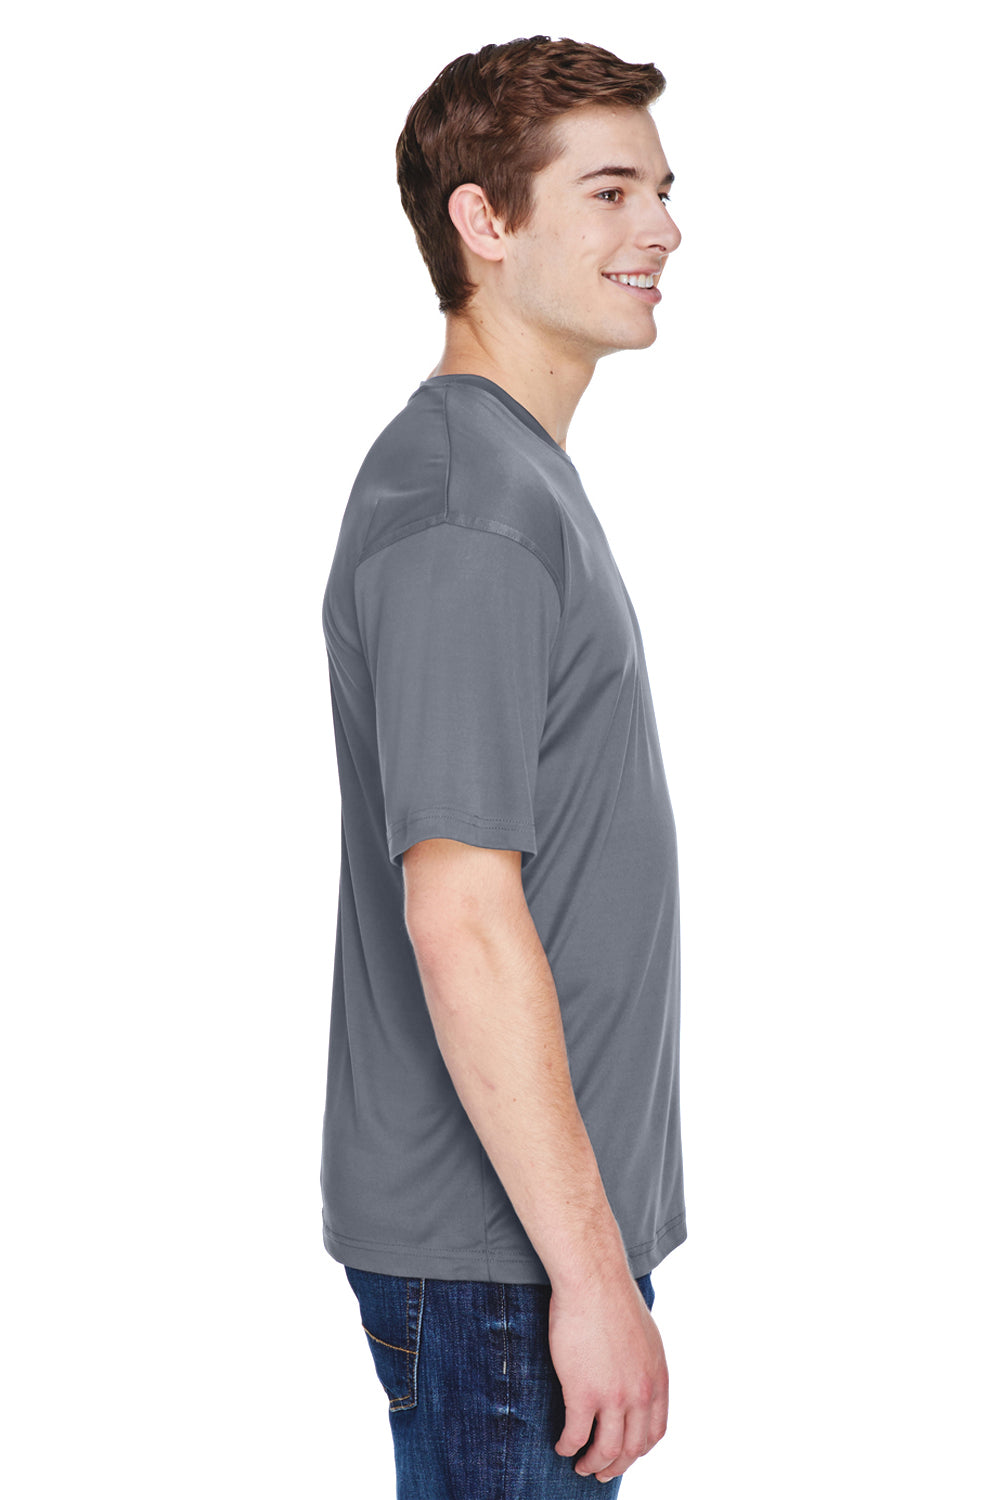 UltraClub 8620 Mens Cool & Dry Performance Moisture Wicking Short Sleeve Crewneck T-Shirt Charcoal Grey Side